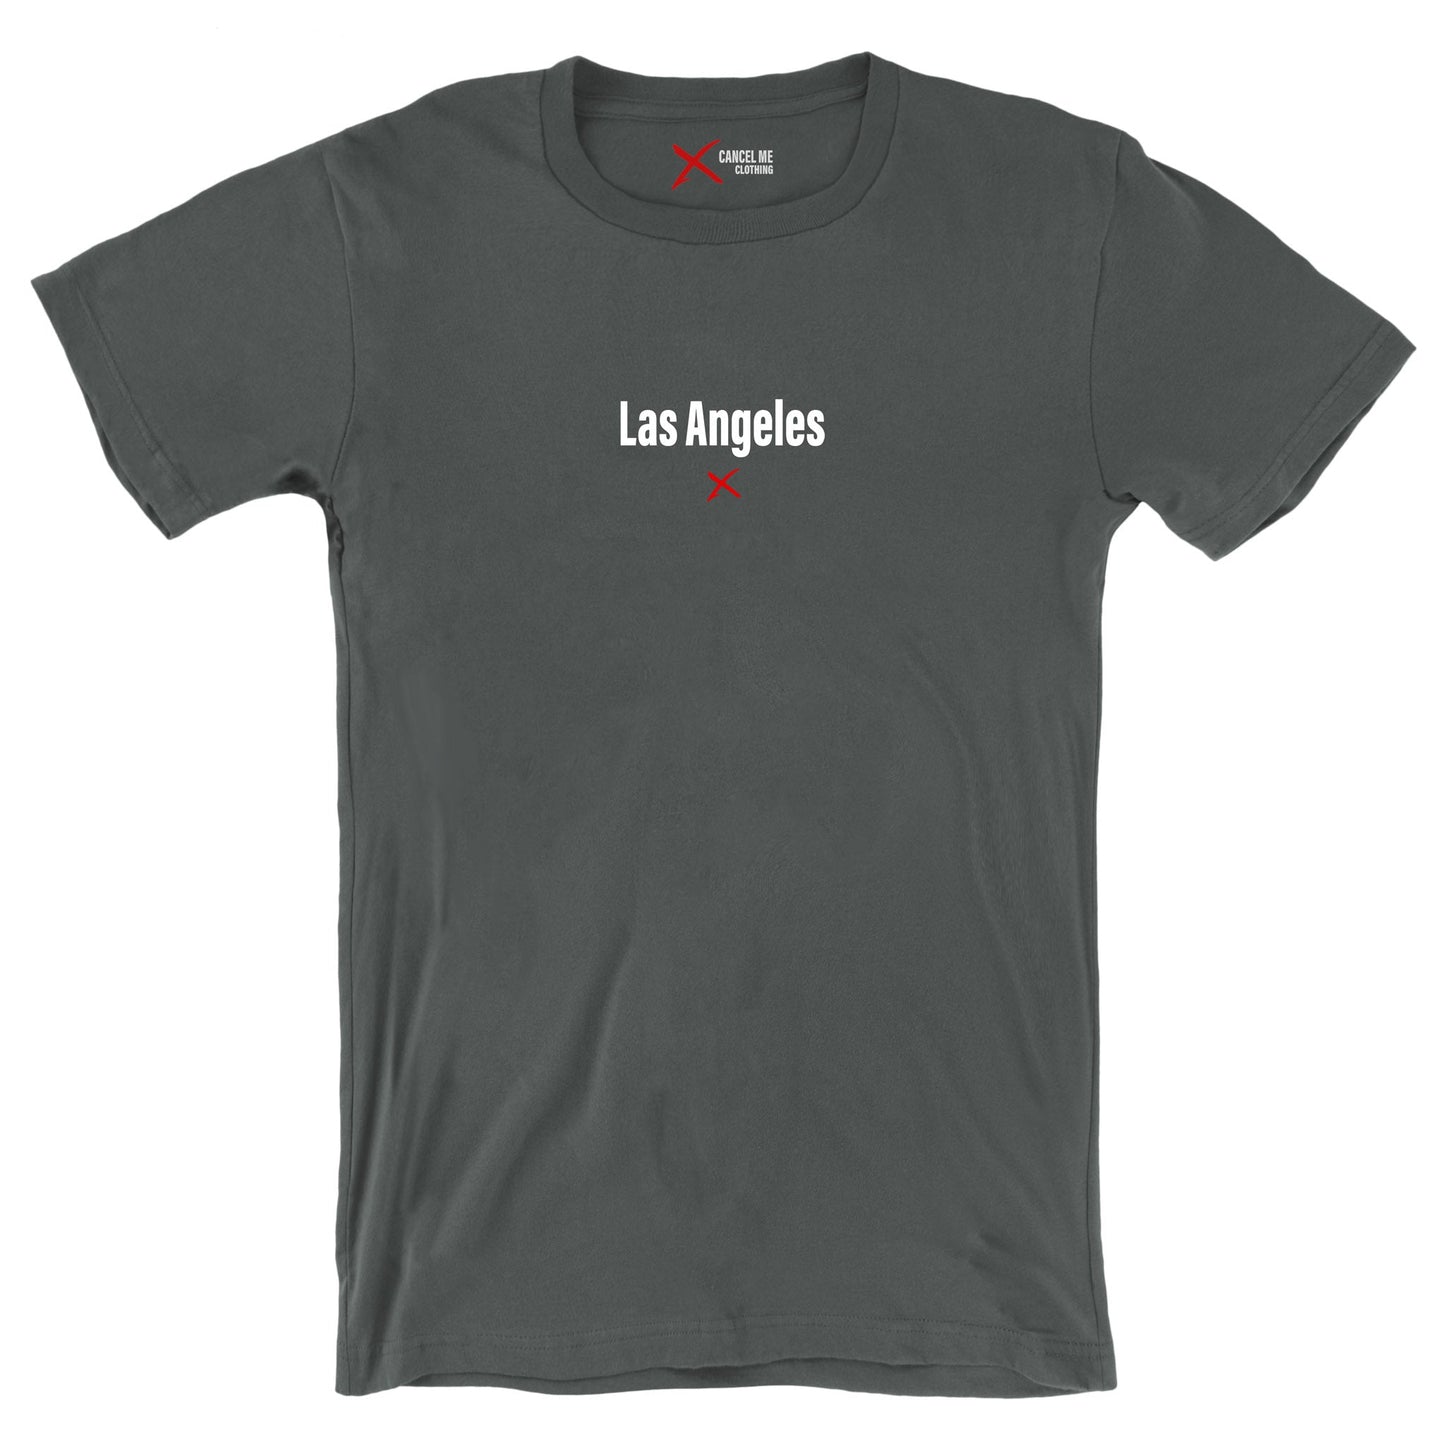 Las Angeles - Shirt